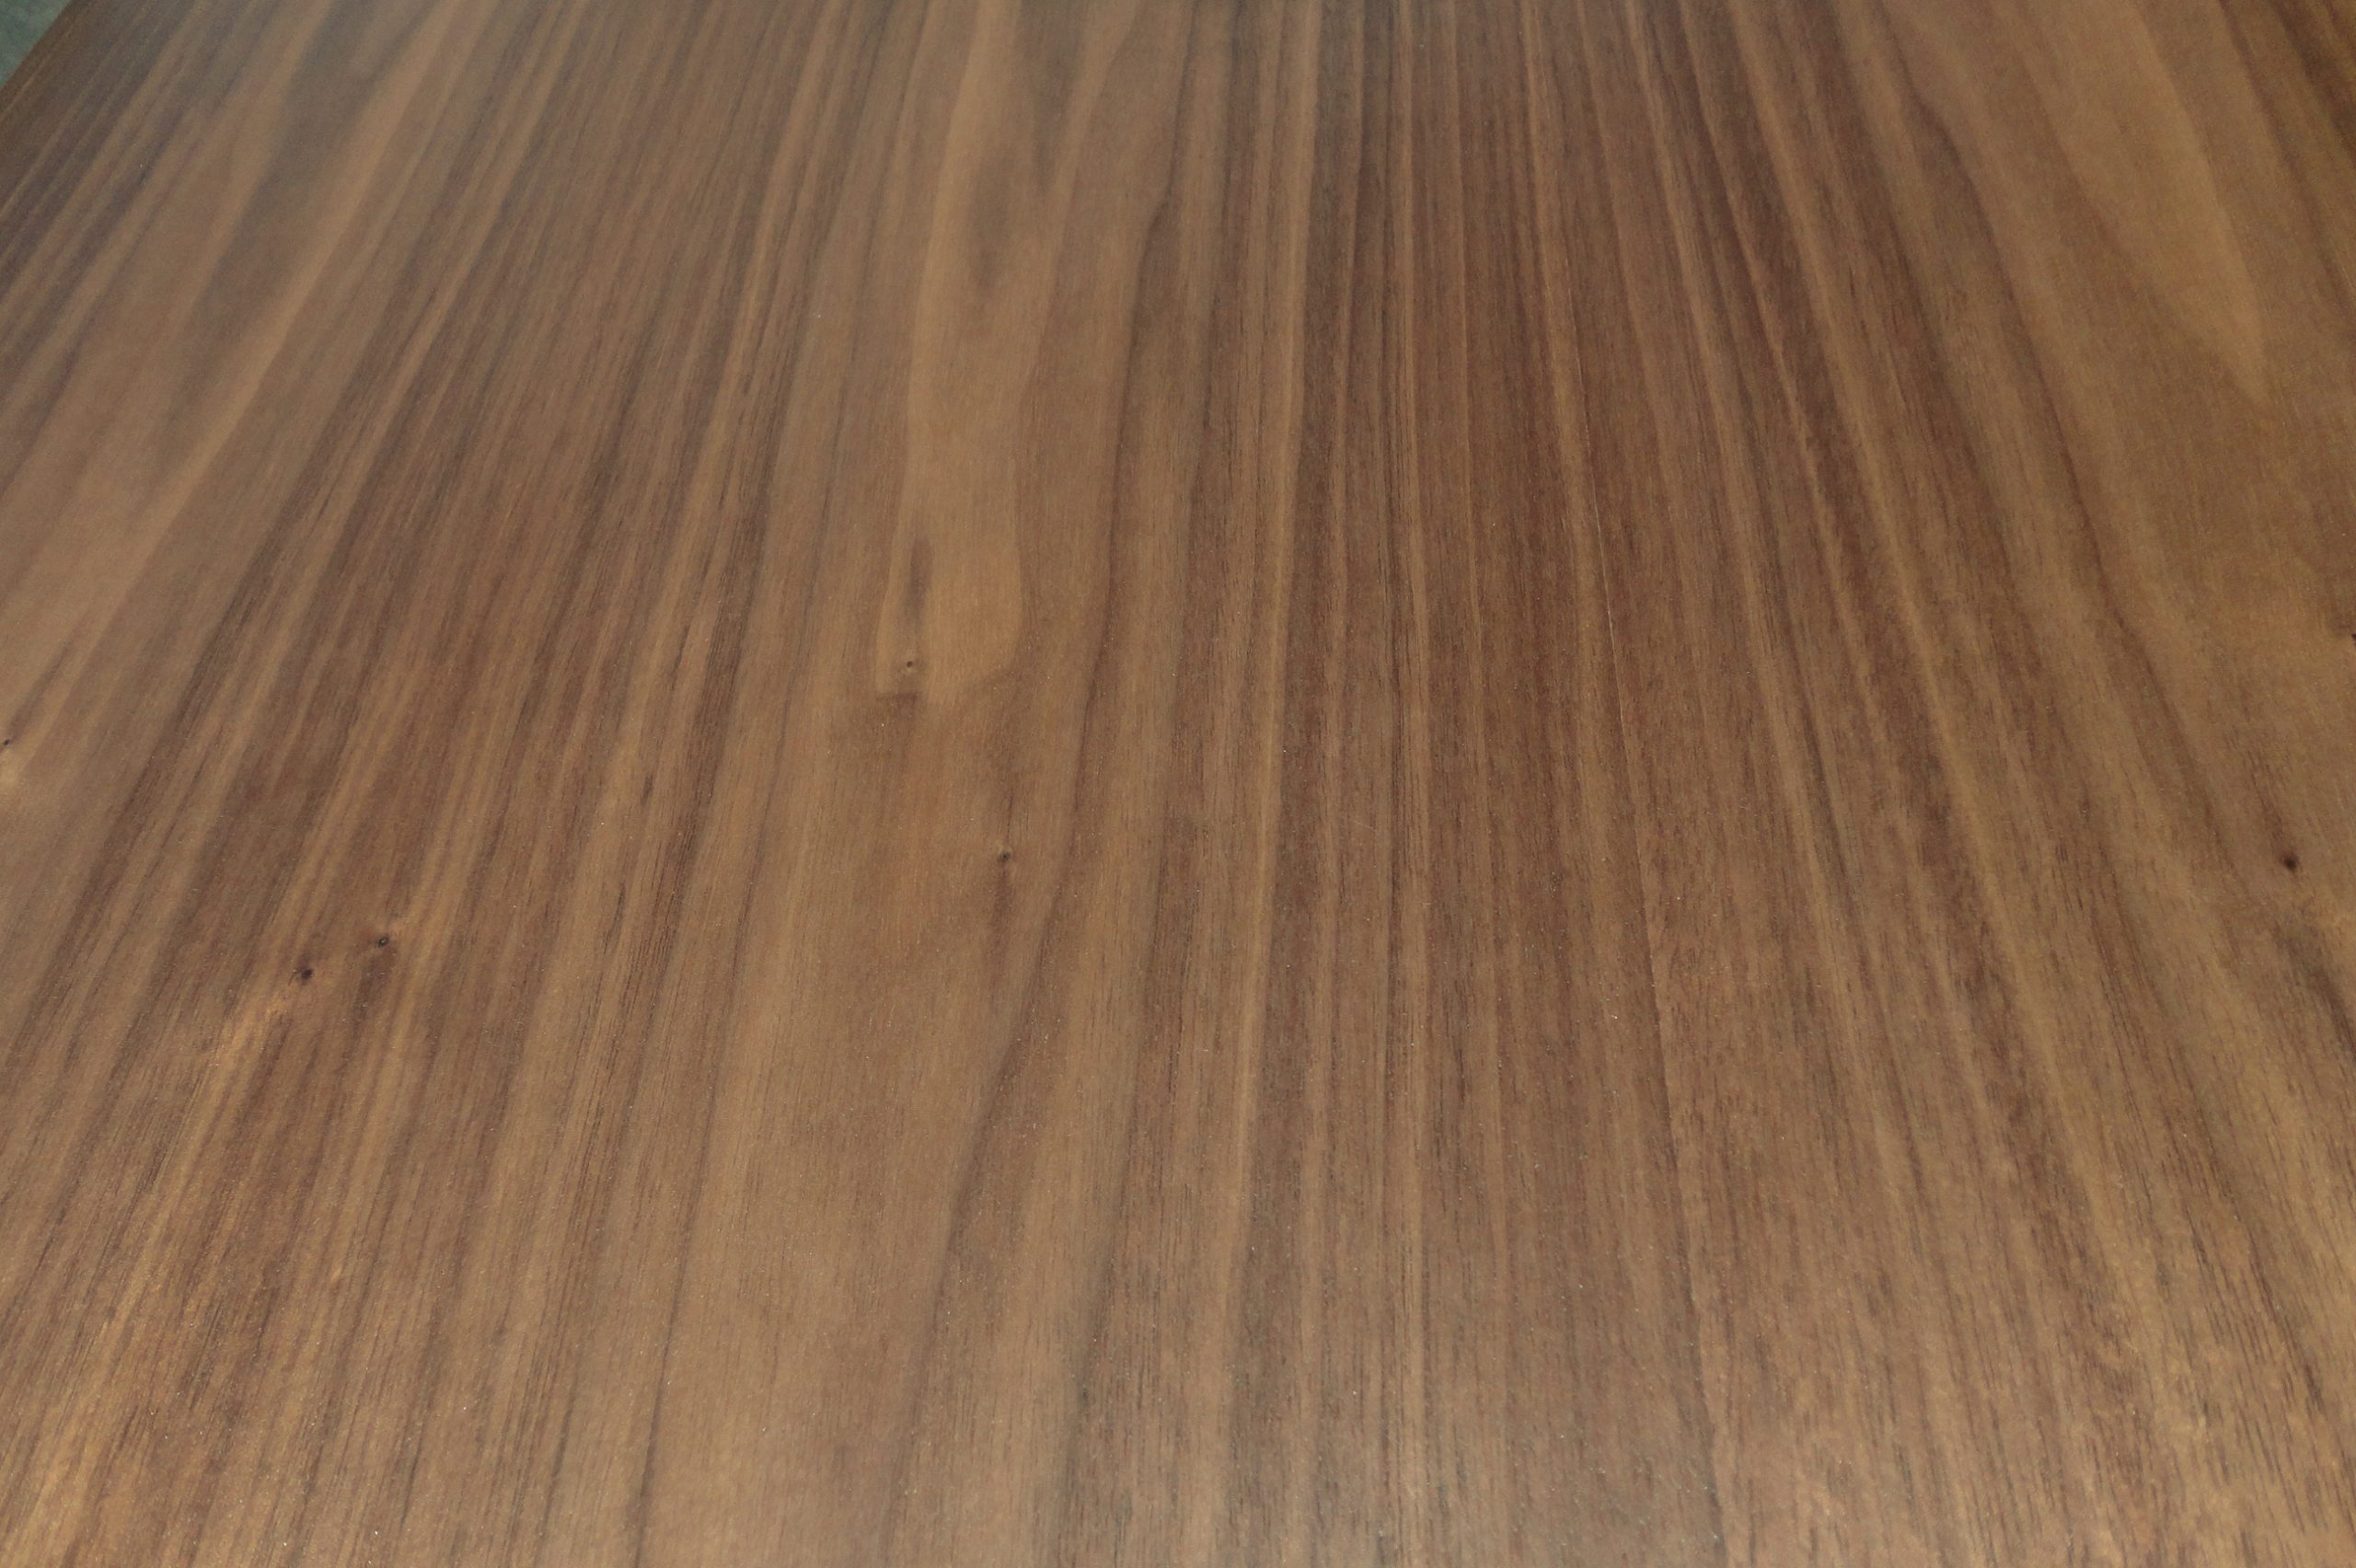 Walnut wood veneer 48" x 96" with paper backer 4' x 8' x 1/40" thickness A grade 